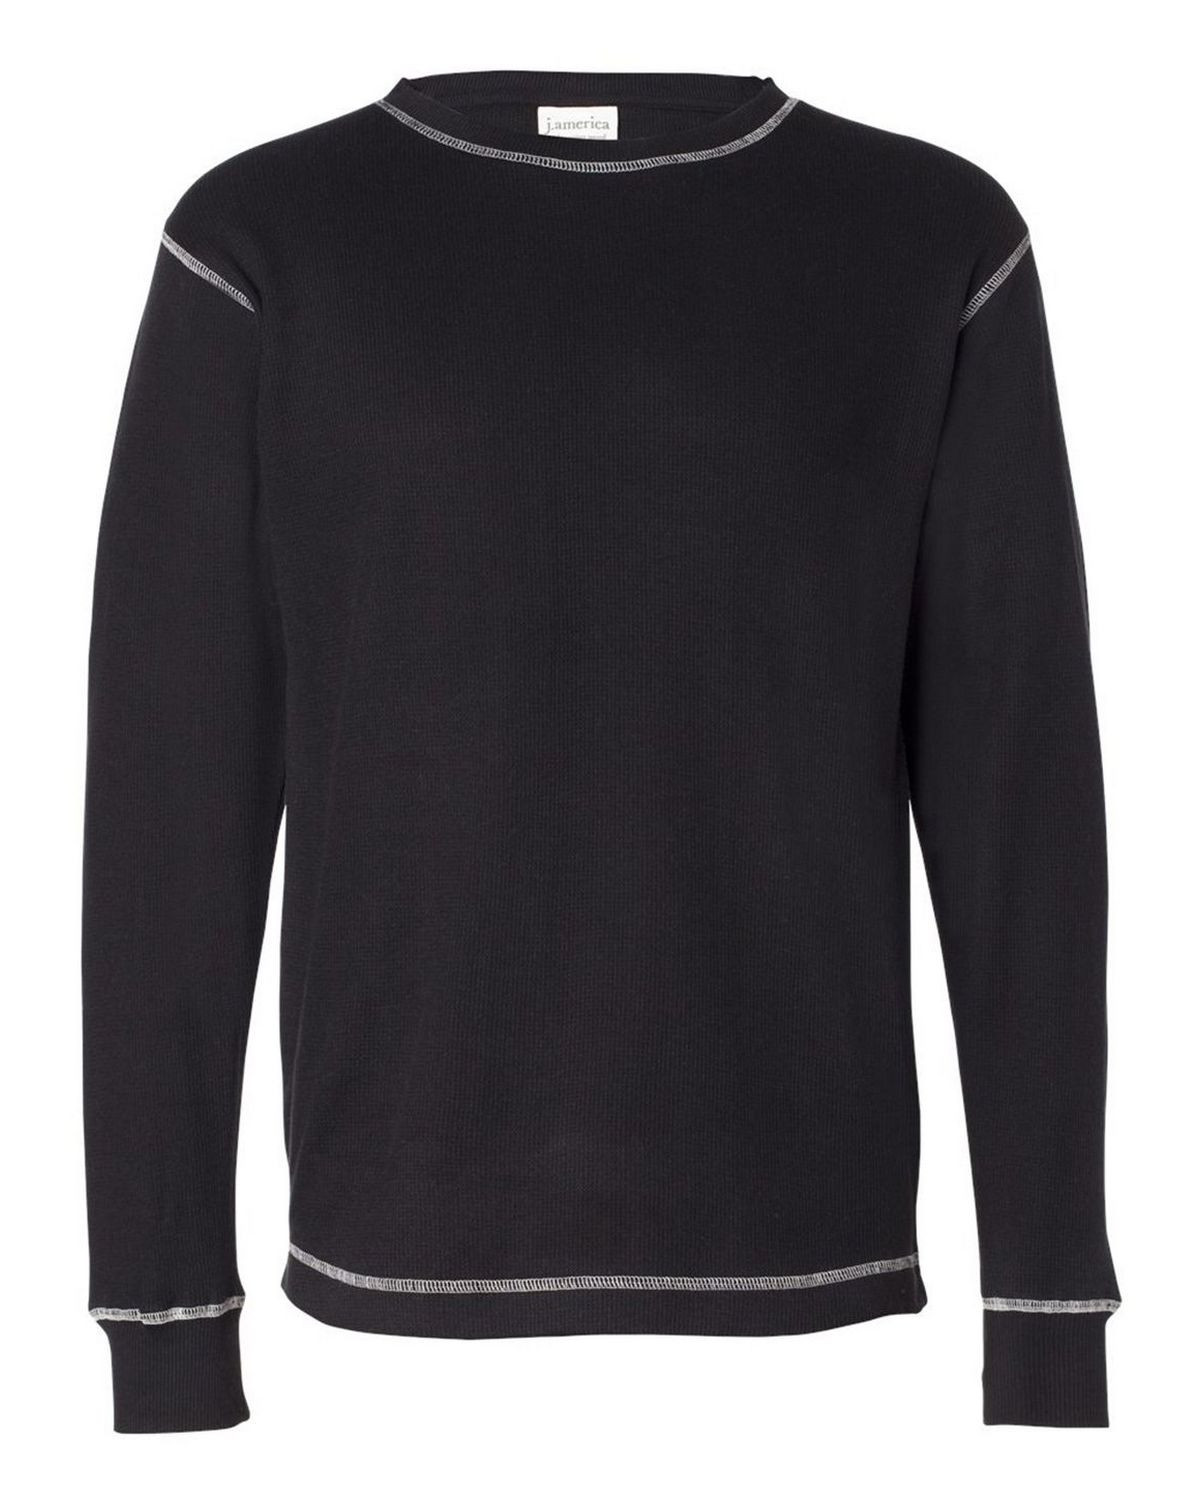 J America 8238 Men's Vintage Long Sleeve Thermal T-Shirt - Black/ Vintage White - S #vintage